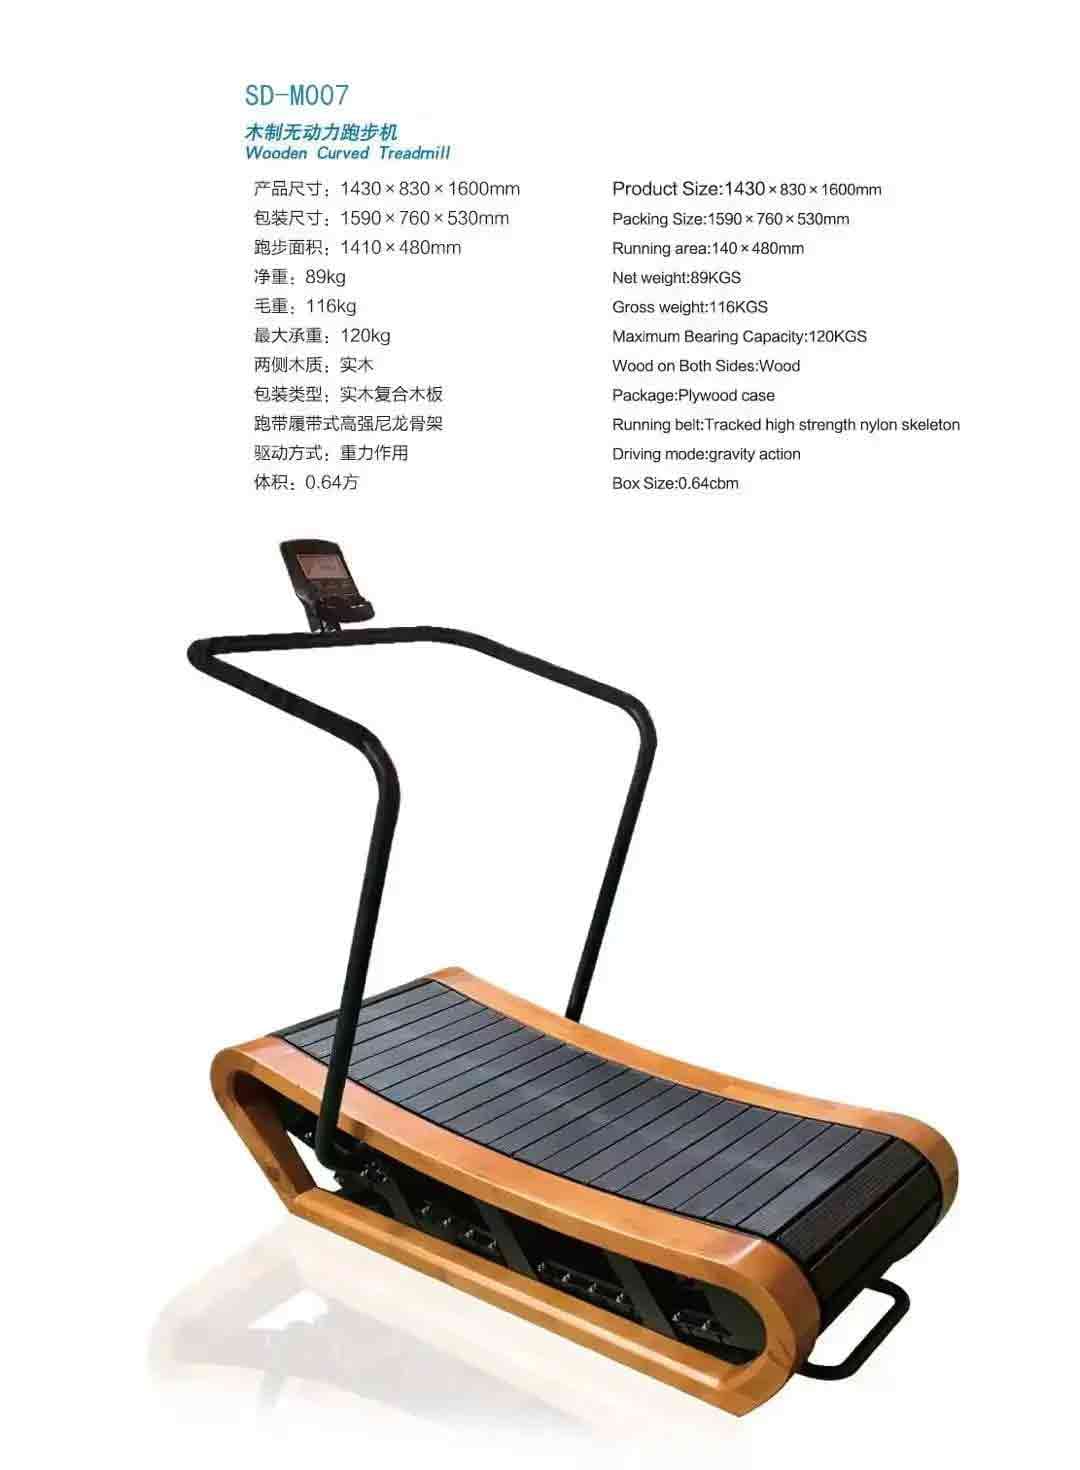 Treadmill - SD-M007 - detail img1